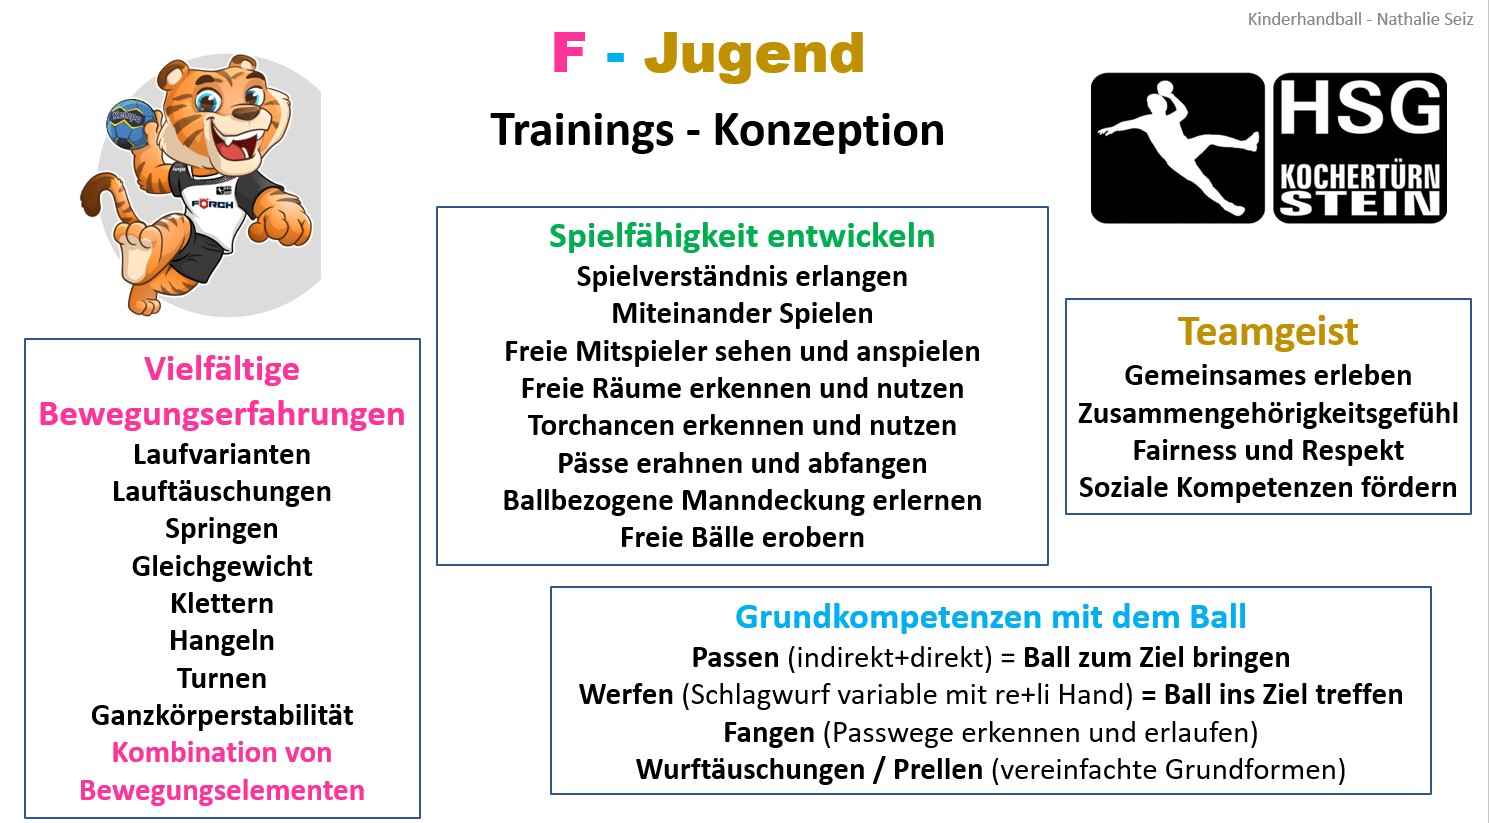 Trainings Konzeption F Jugend.jpg